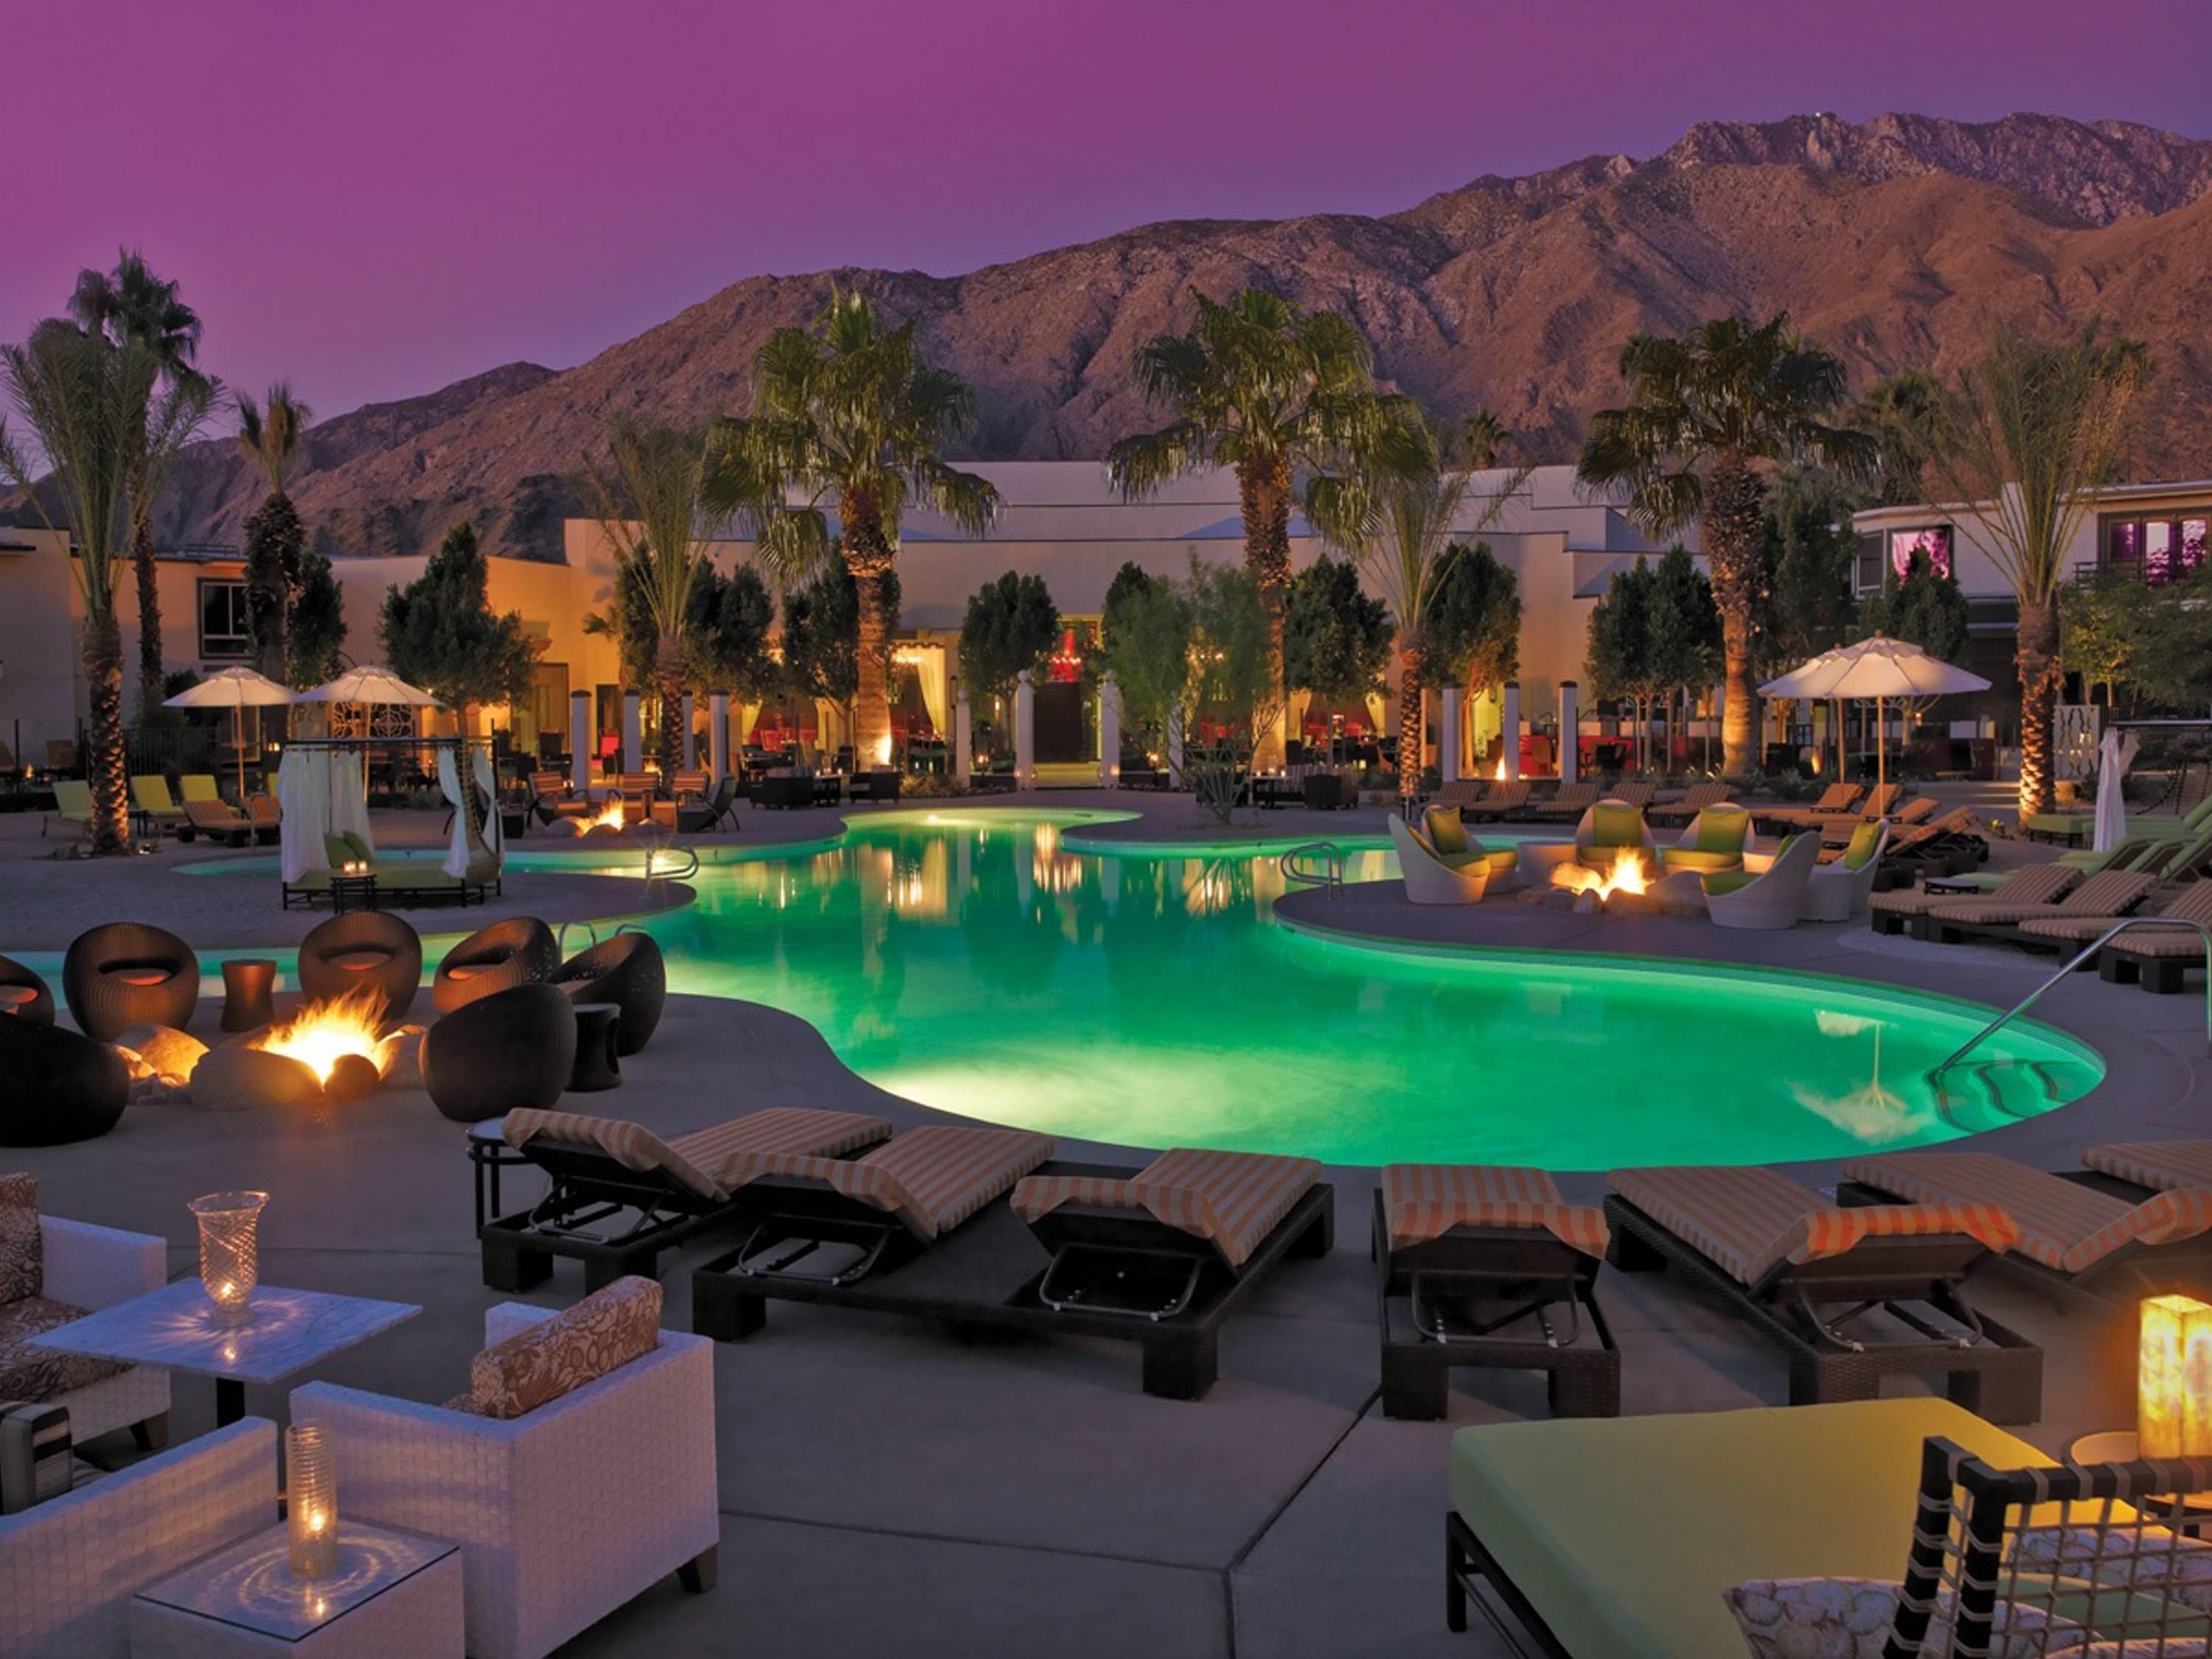 Riviera Hotel Palm Springs Modern Hq Wallpaper